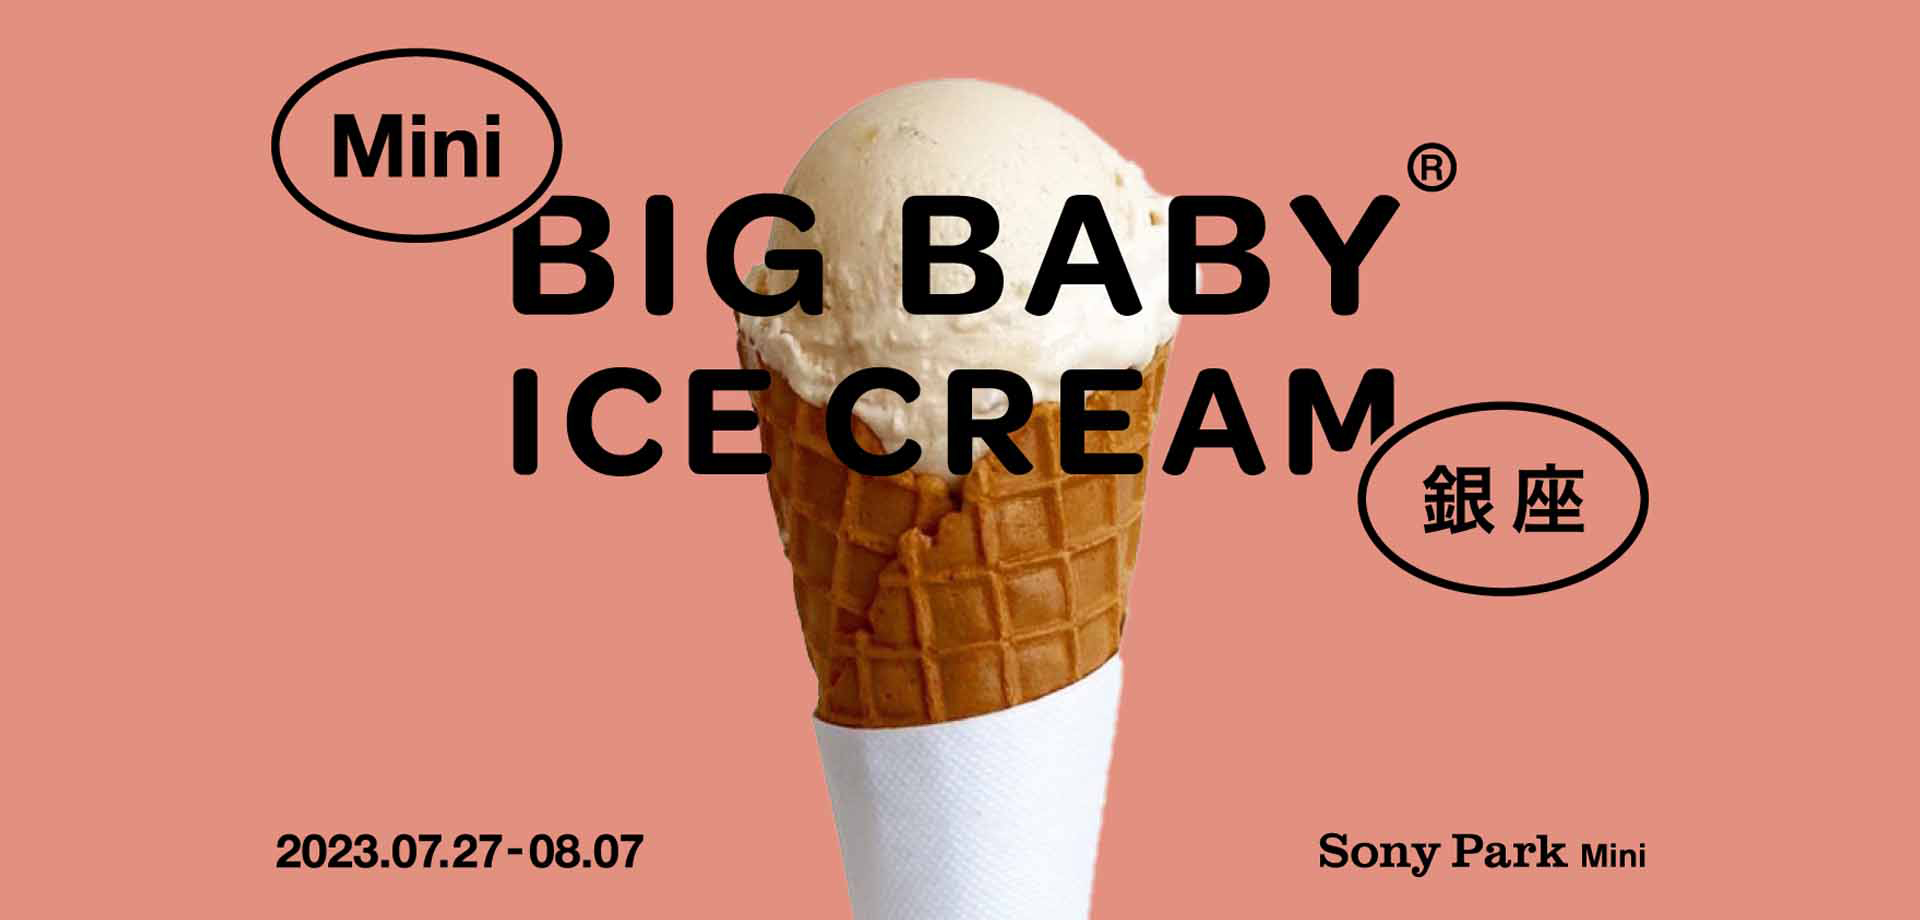 Ginza Sony Park Mini BIG BABY ICE CREAM 銀座